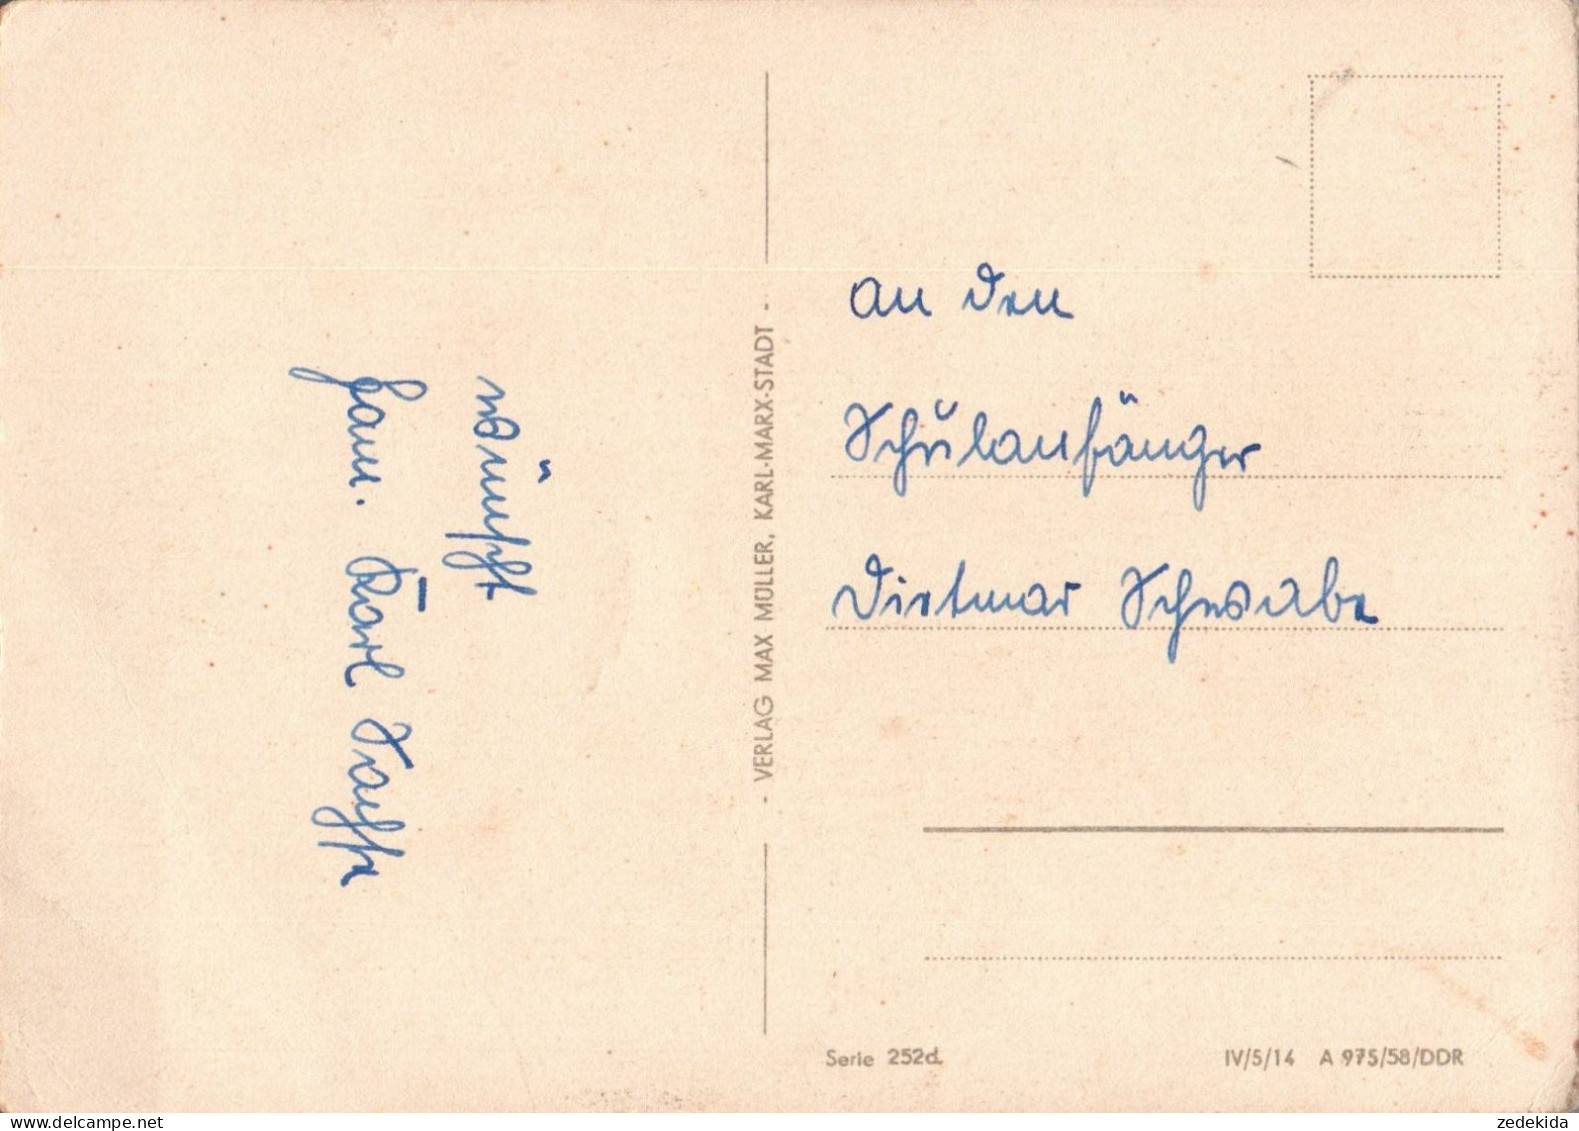 H1816 - Holscher Christine Glückwunschkarte Schulanfang - Verlag Max Müller DDR - Premier Jour D'école